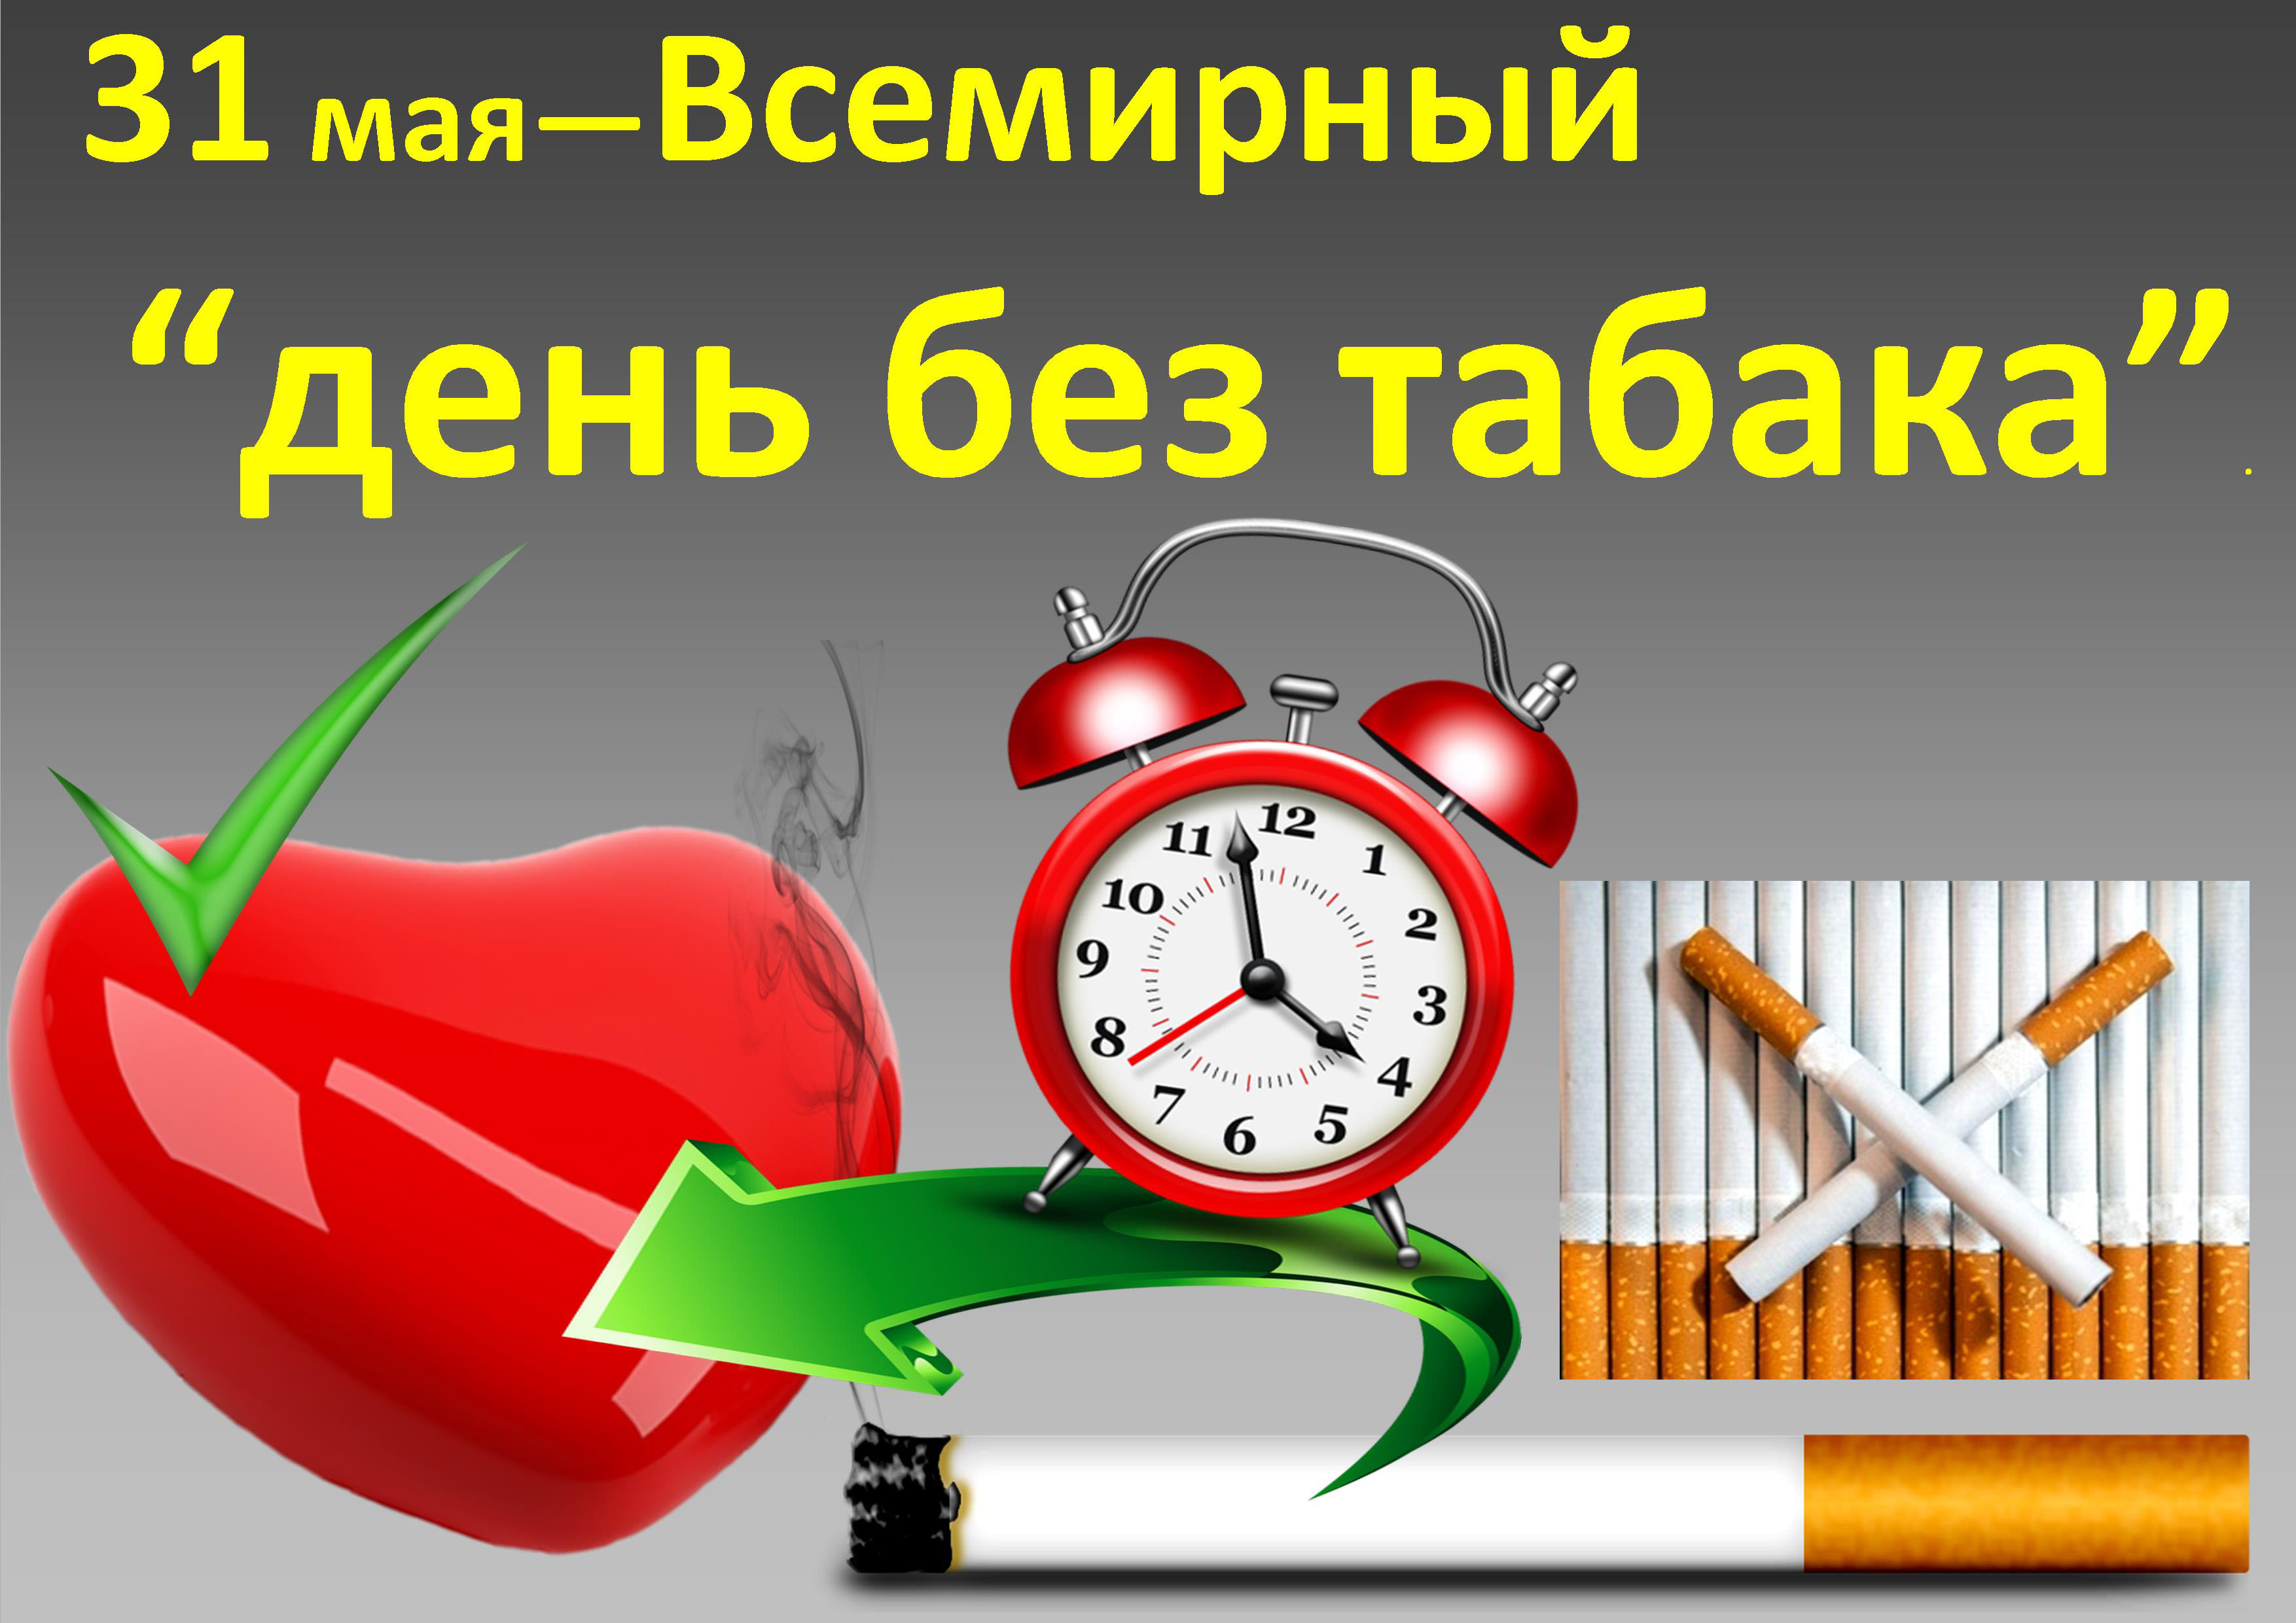 world no tobacco day 2020